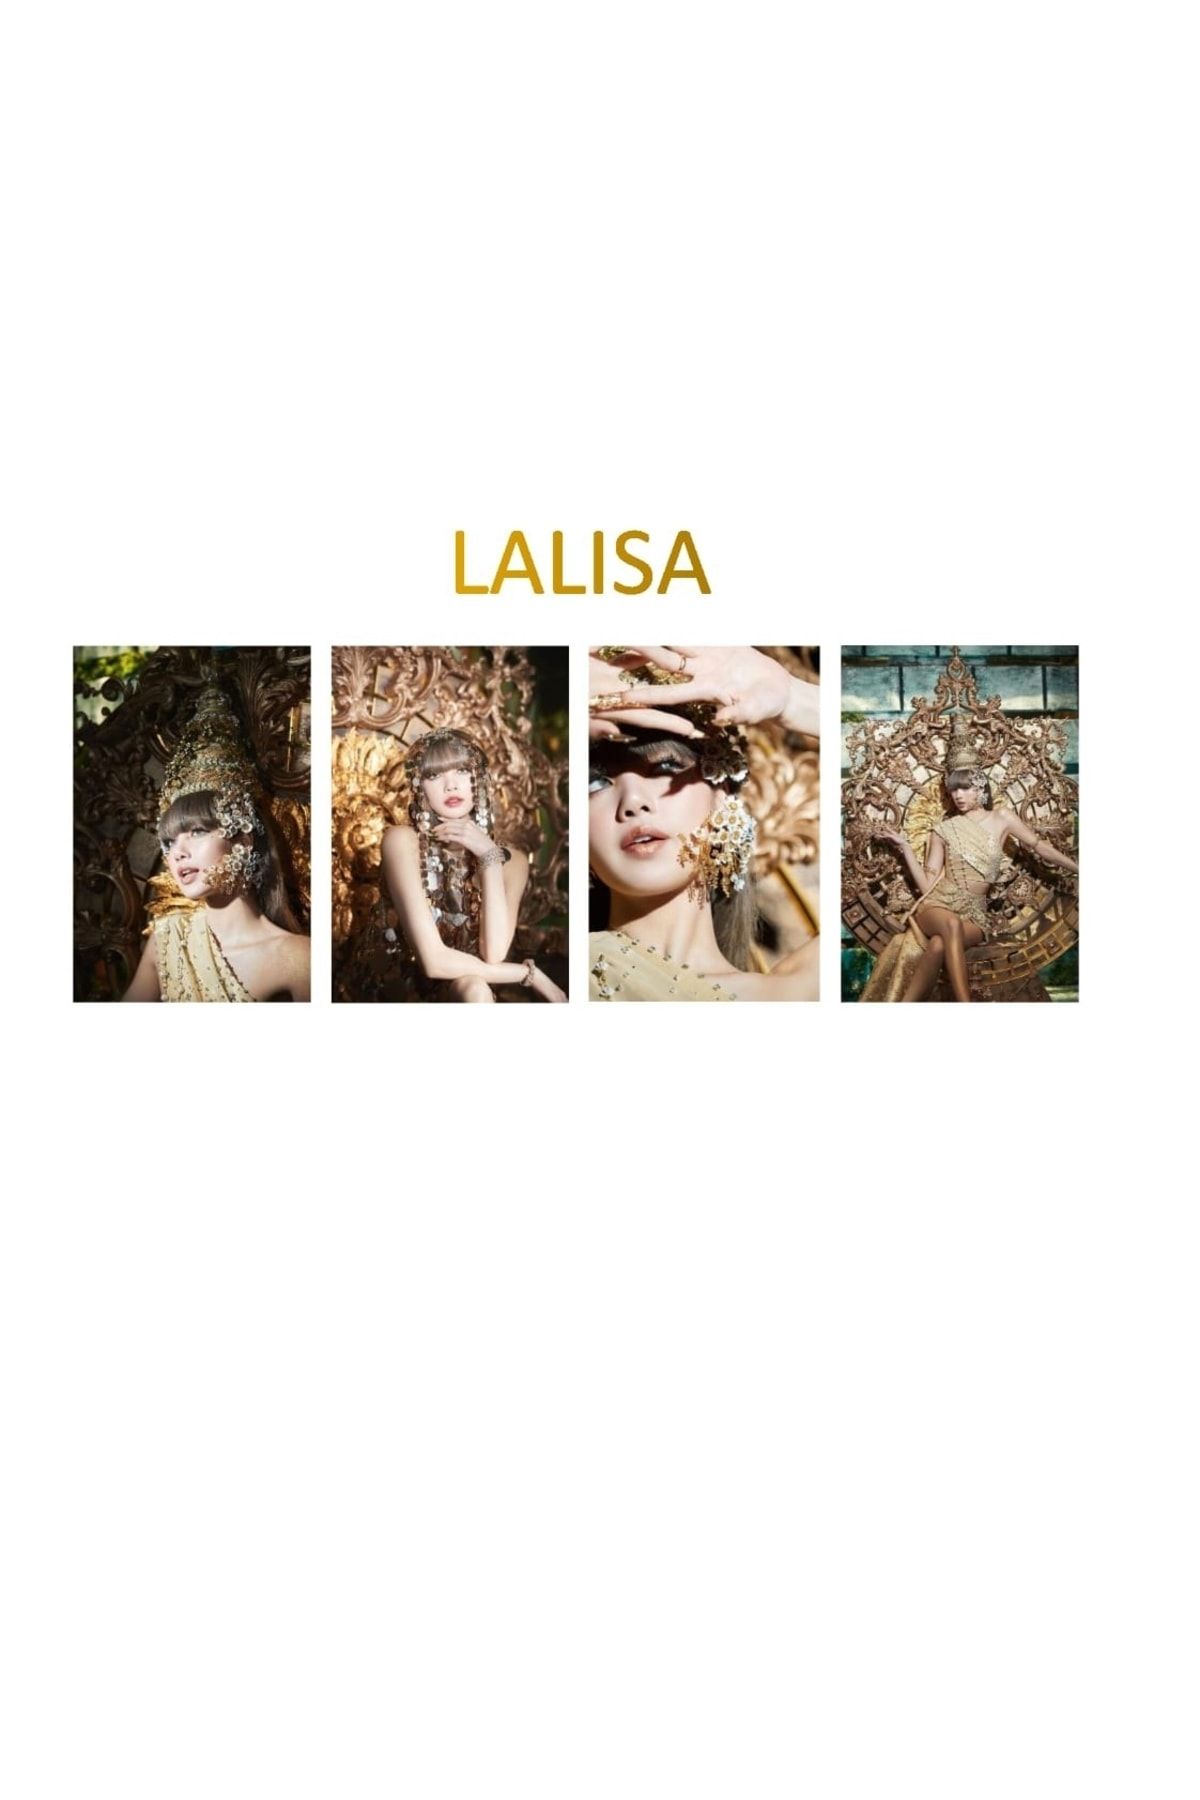 REN AKSESUAR Kpop Blackpınk Lisa Lalisa Albüm Kartpostal 4 Adet